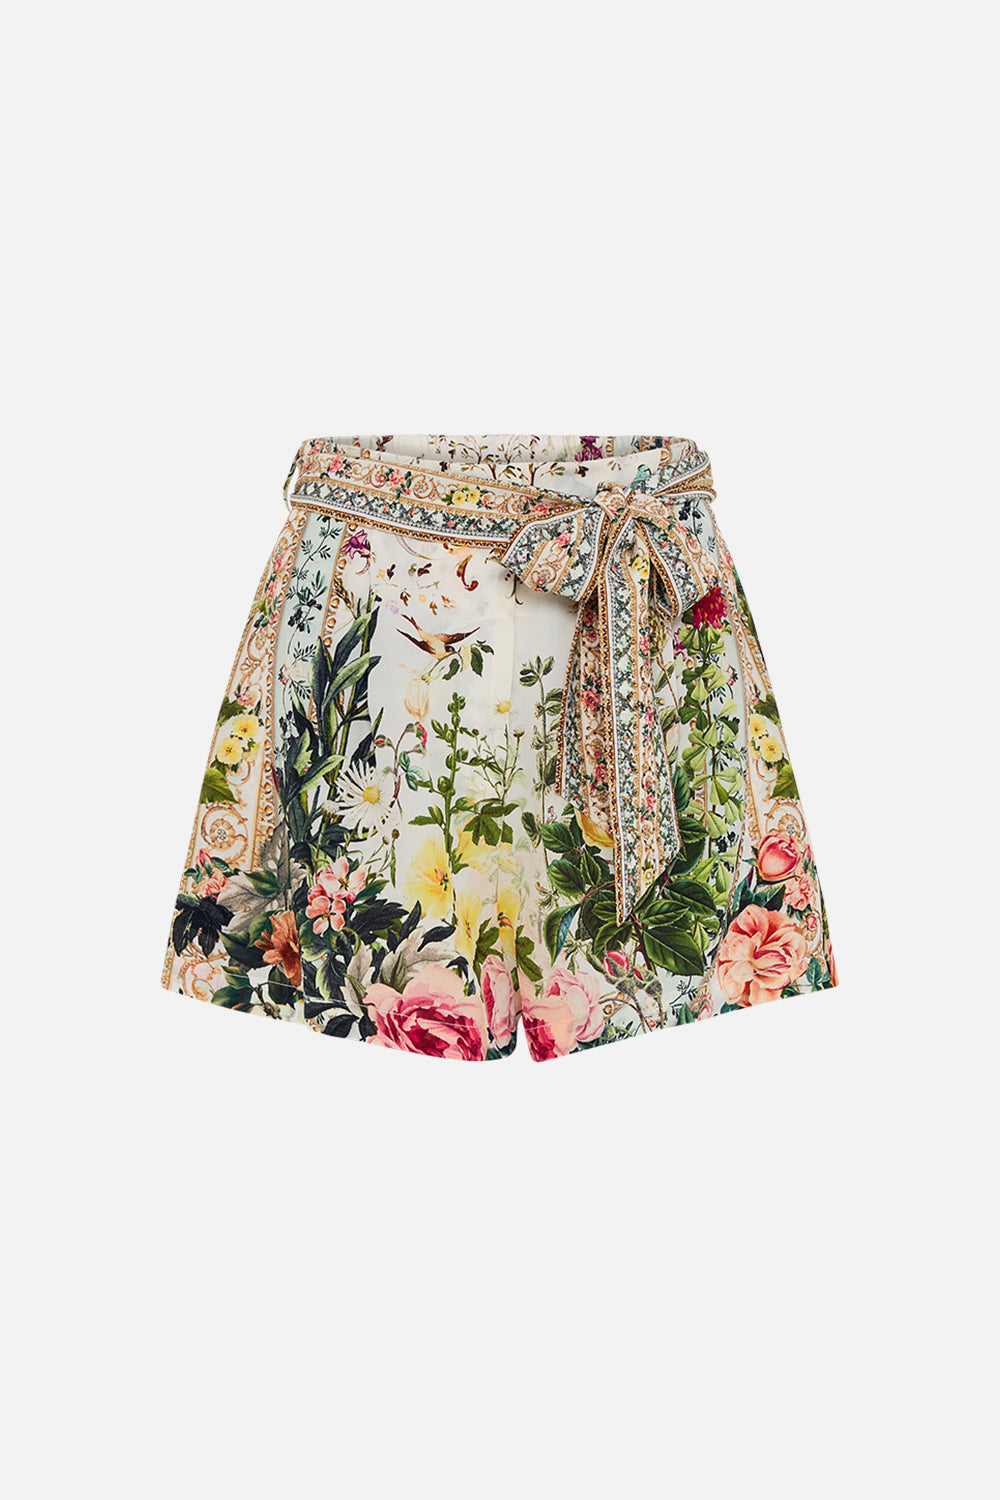 CAMILLA silk shorts in Renaissance Romance print